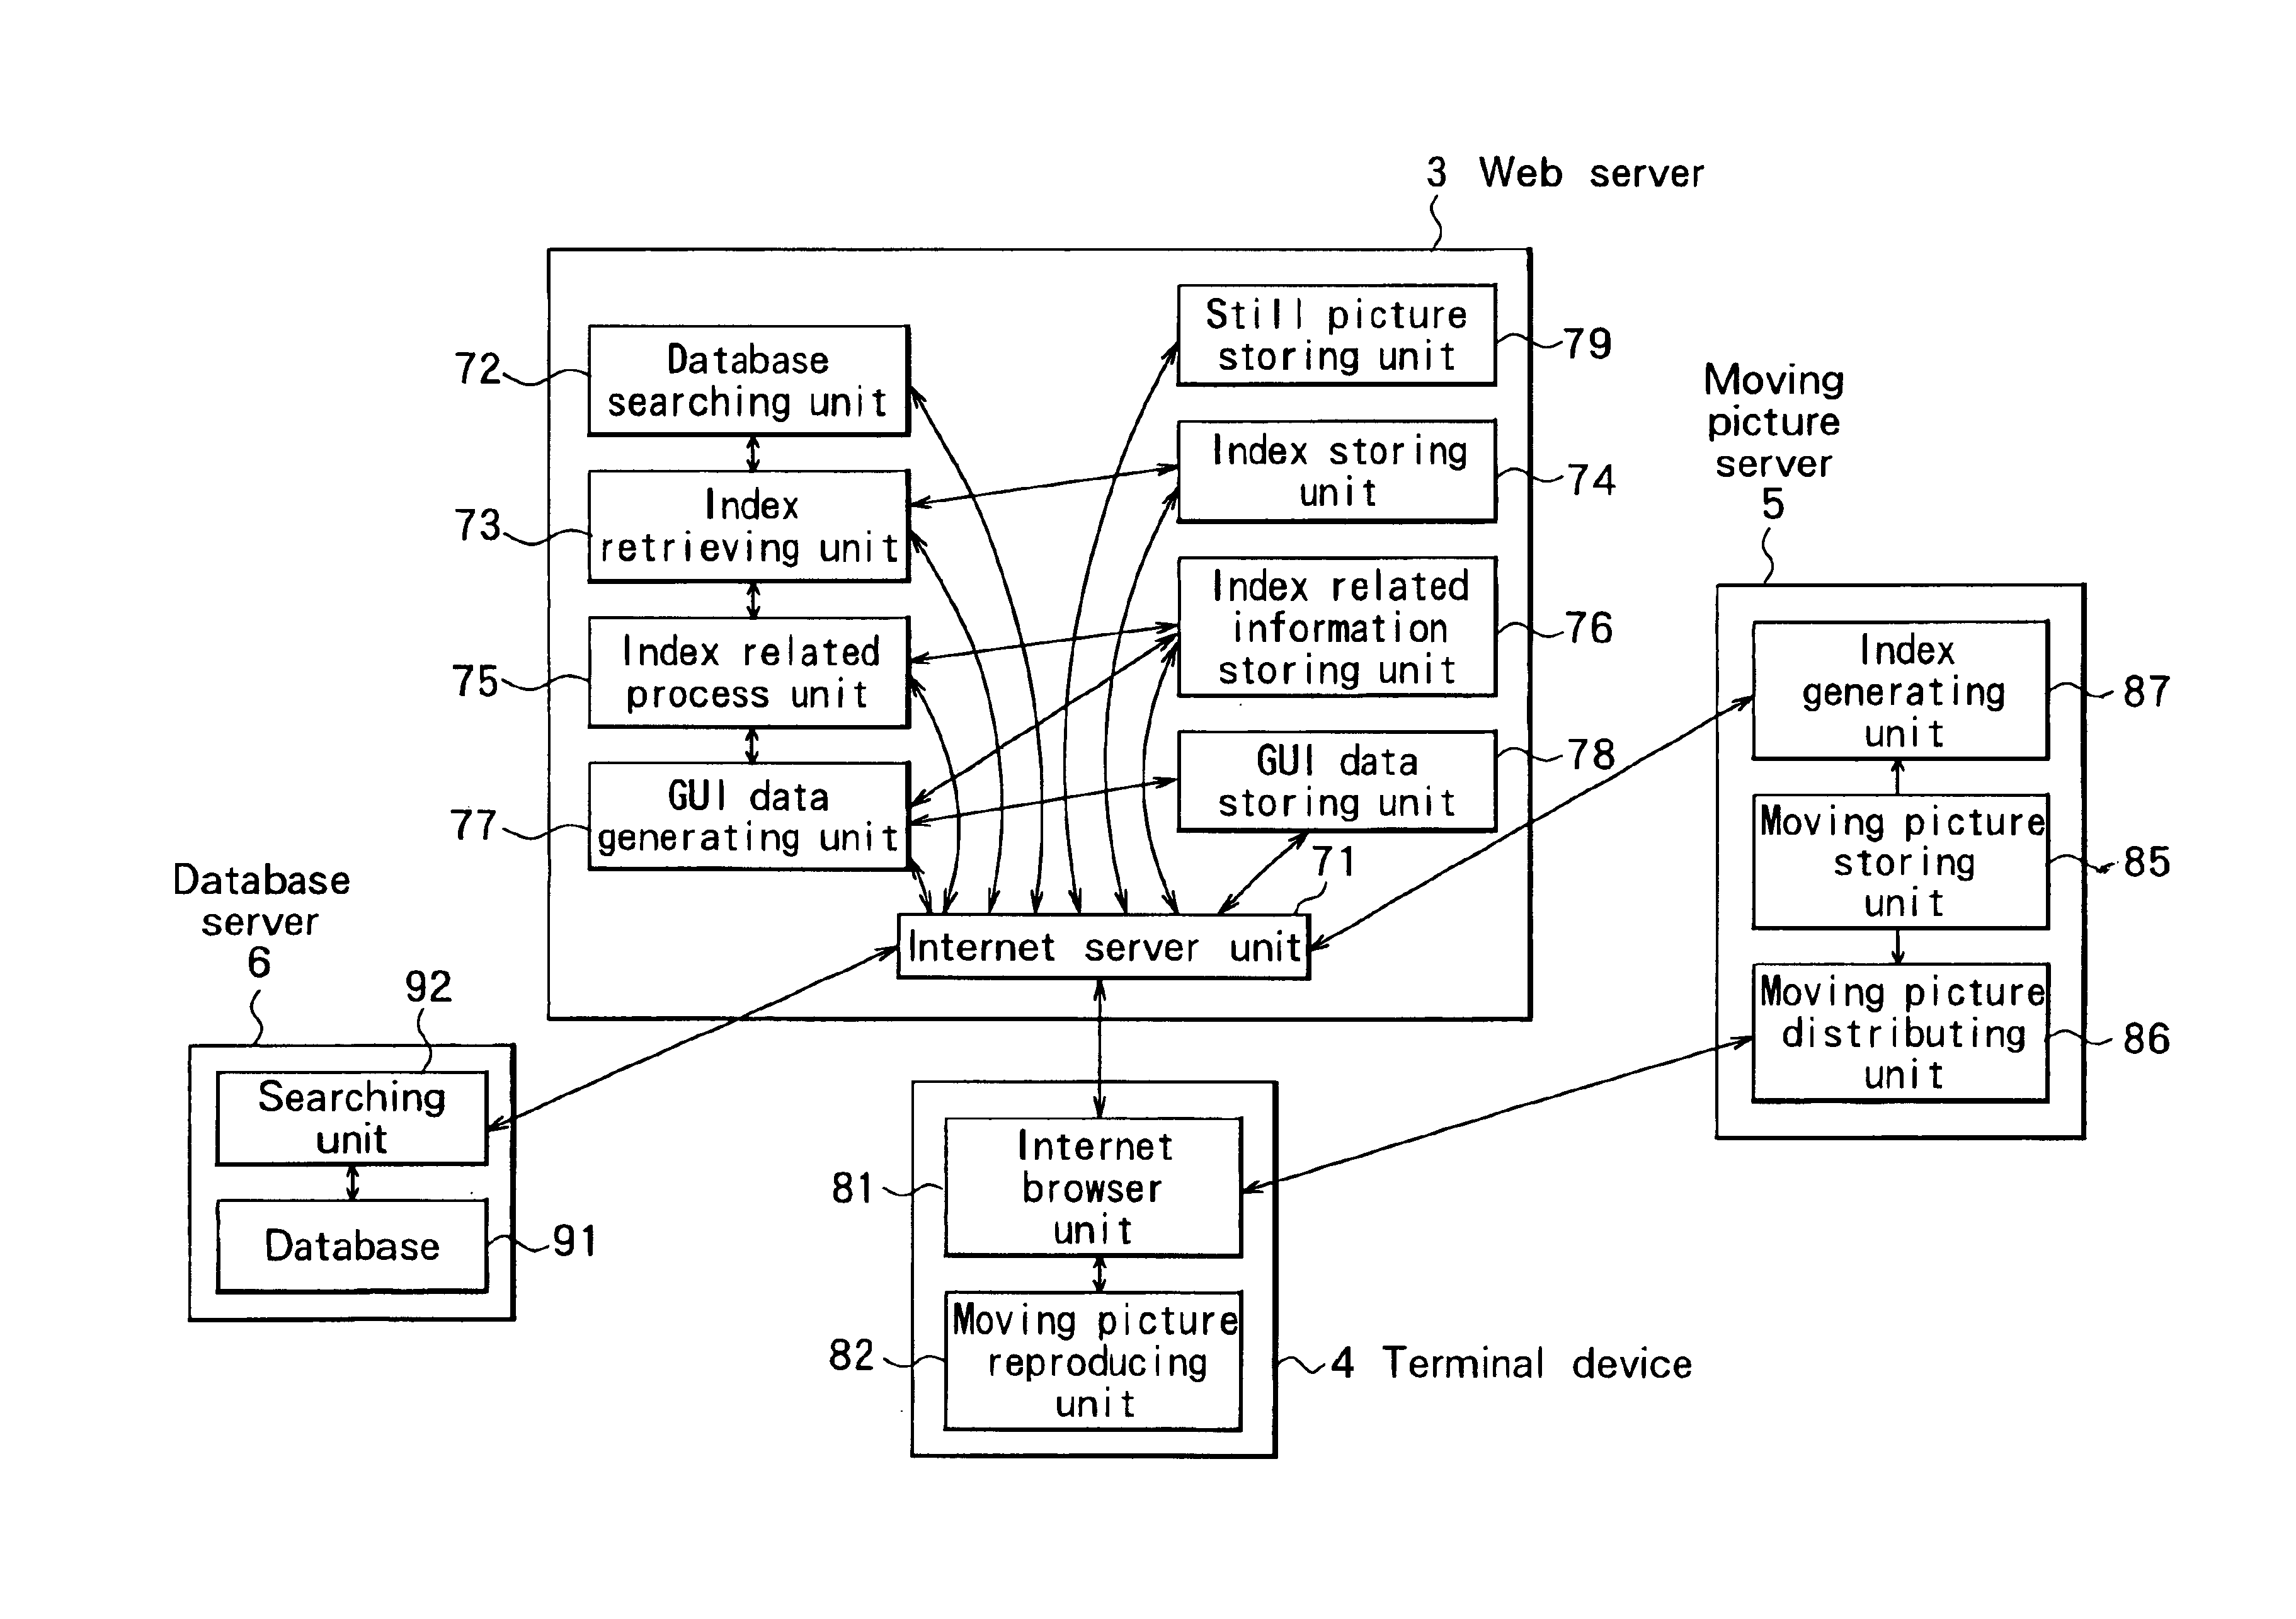 Image display apparatus and method